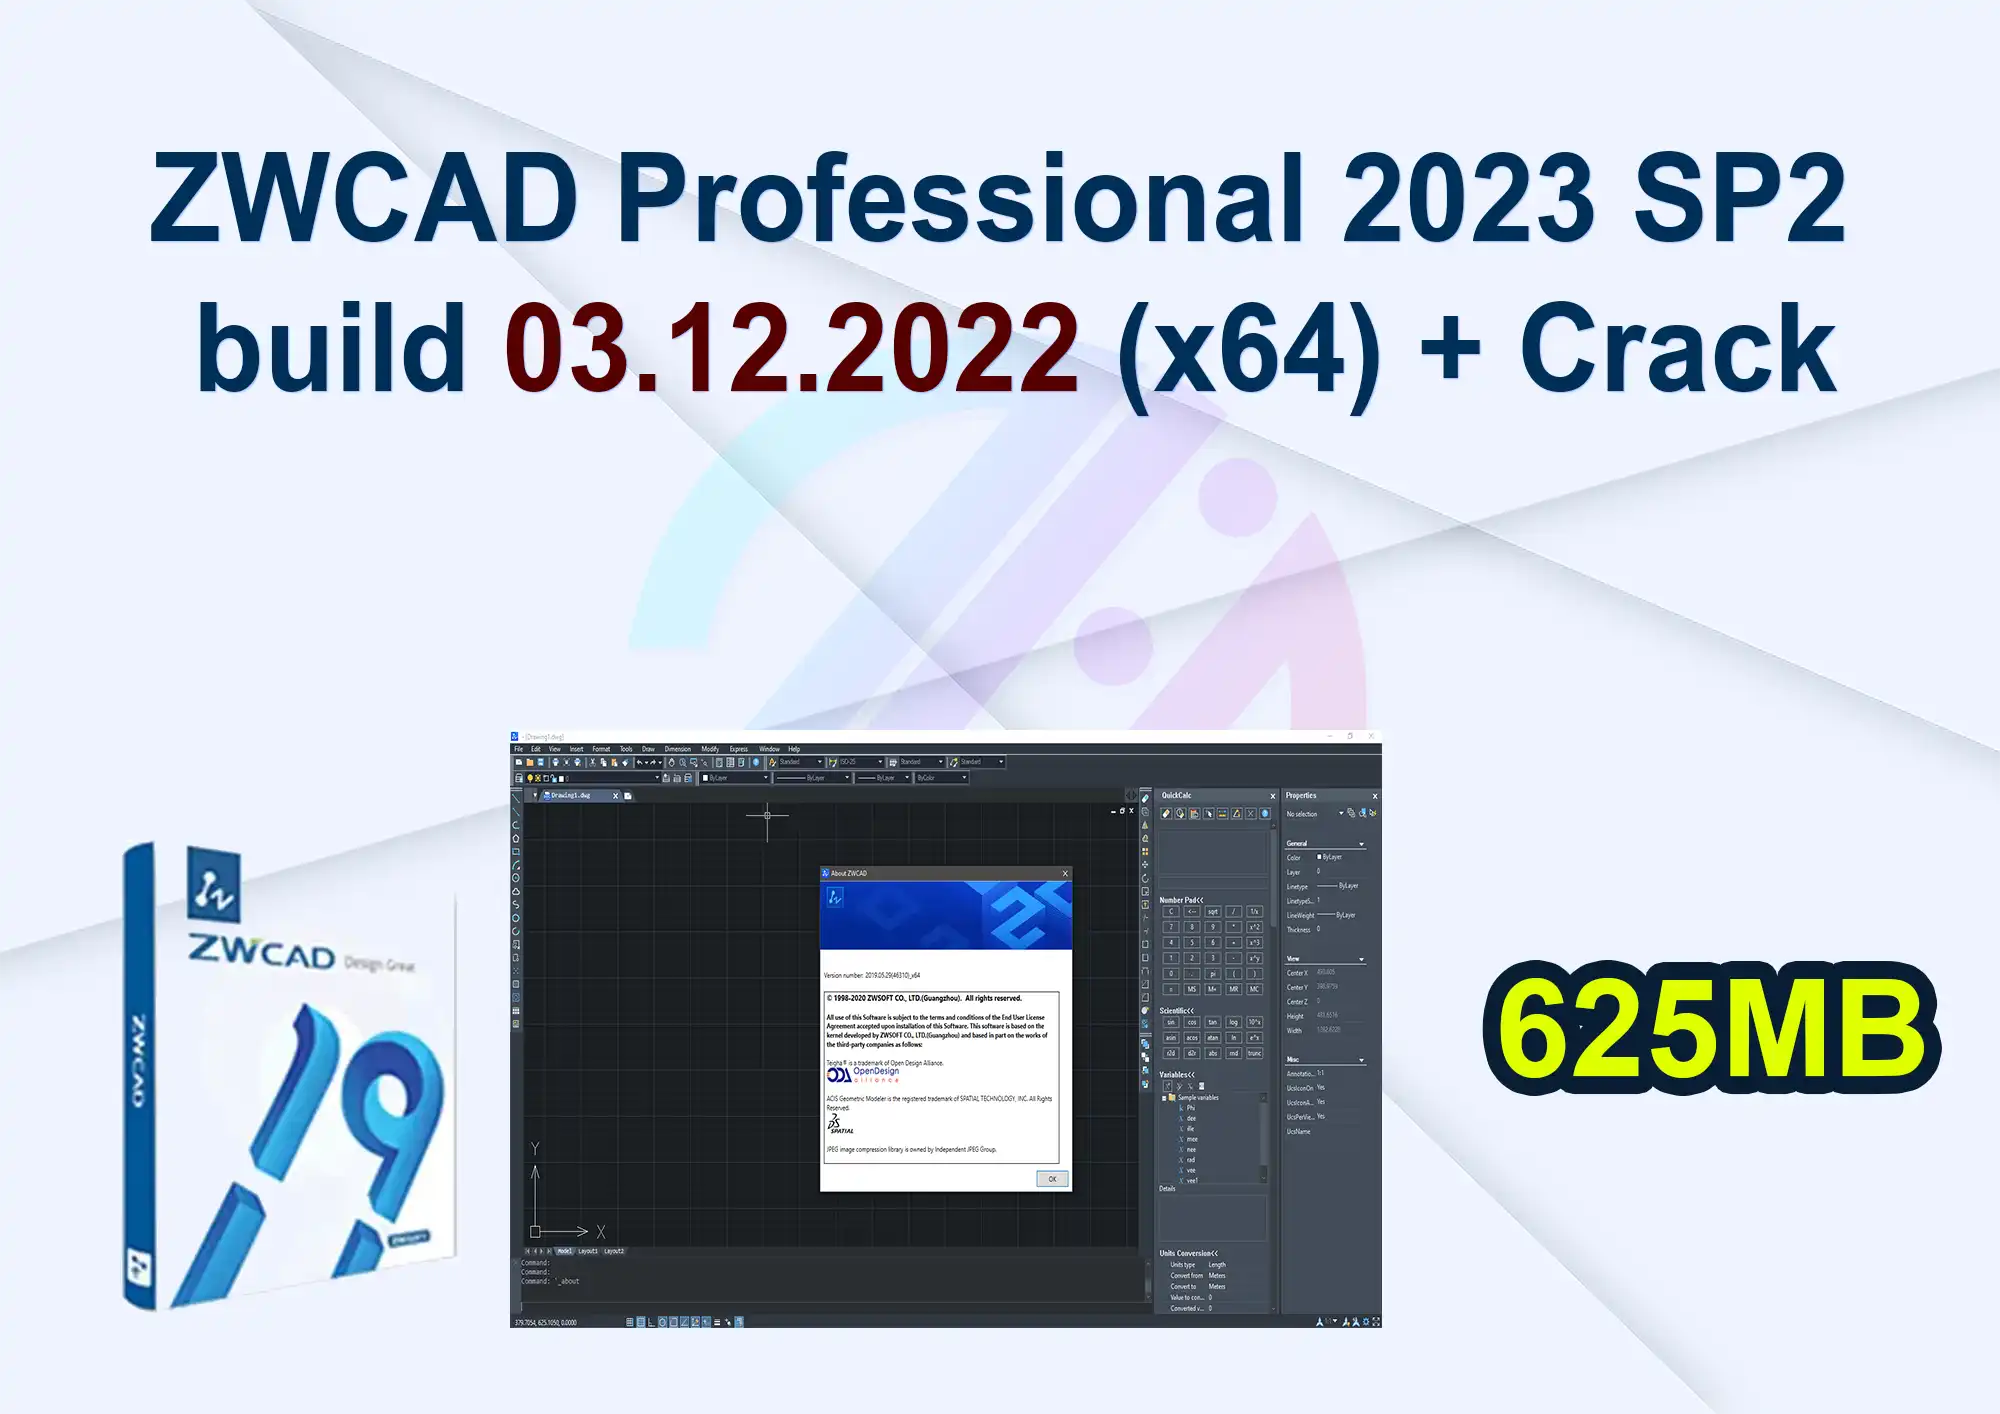 ZWCAD Professional 2023 SP2 build 03.12.2022 (x64) + Crack